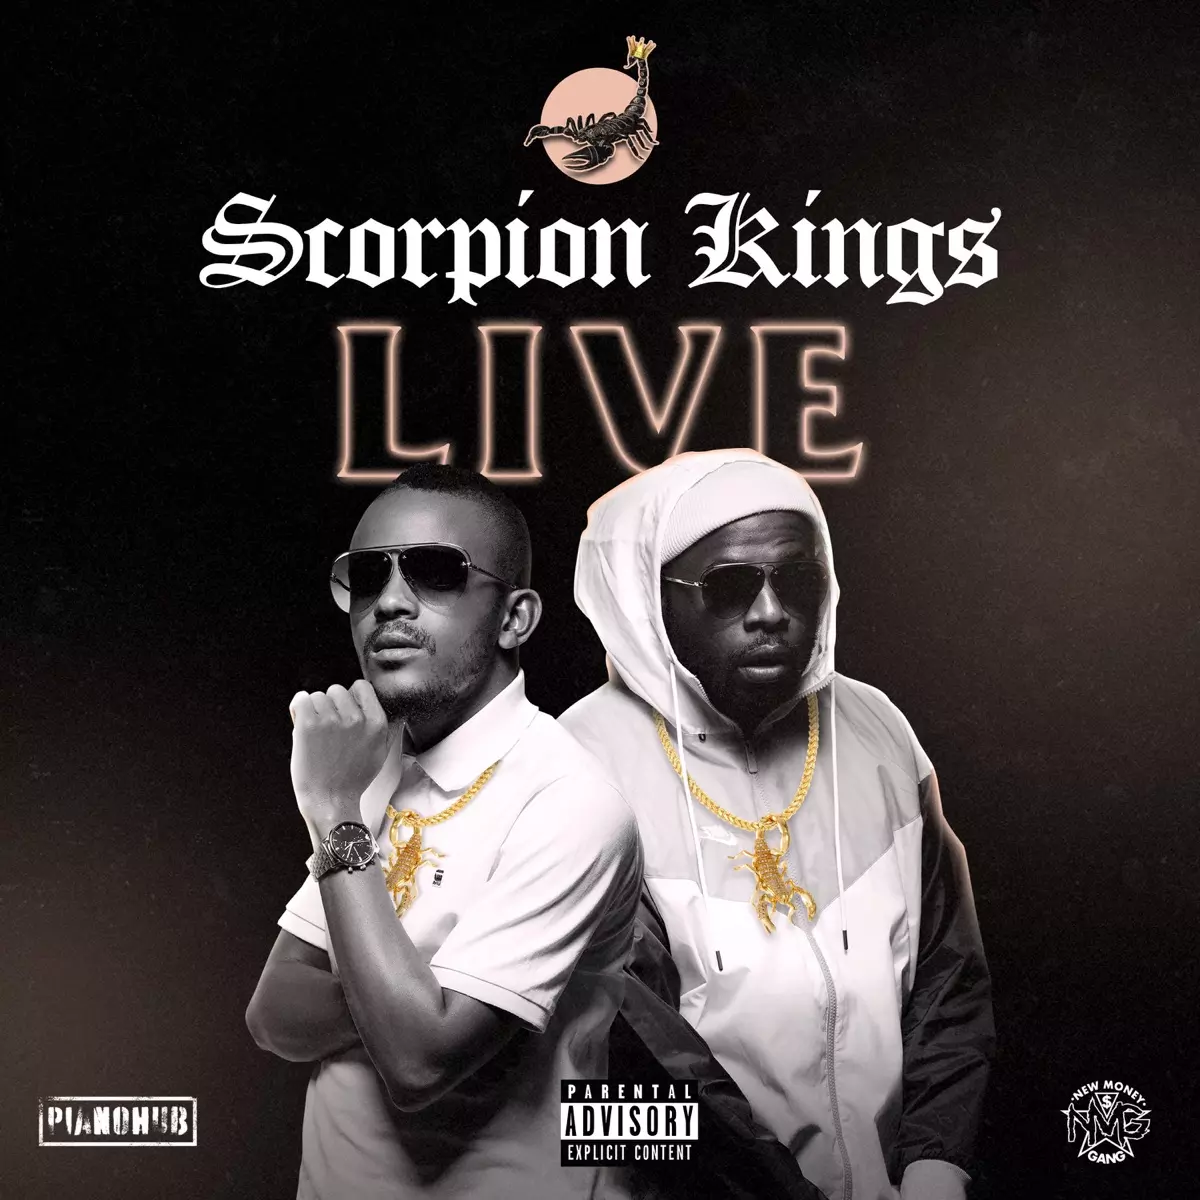 Scorpion Kings (Live) - Album by Kabza De Small & DJ Maphorisa - Apple Music